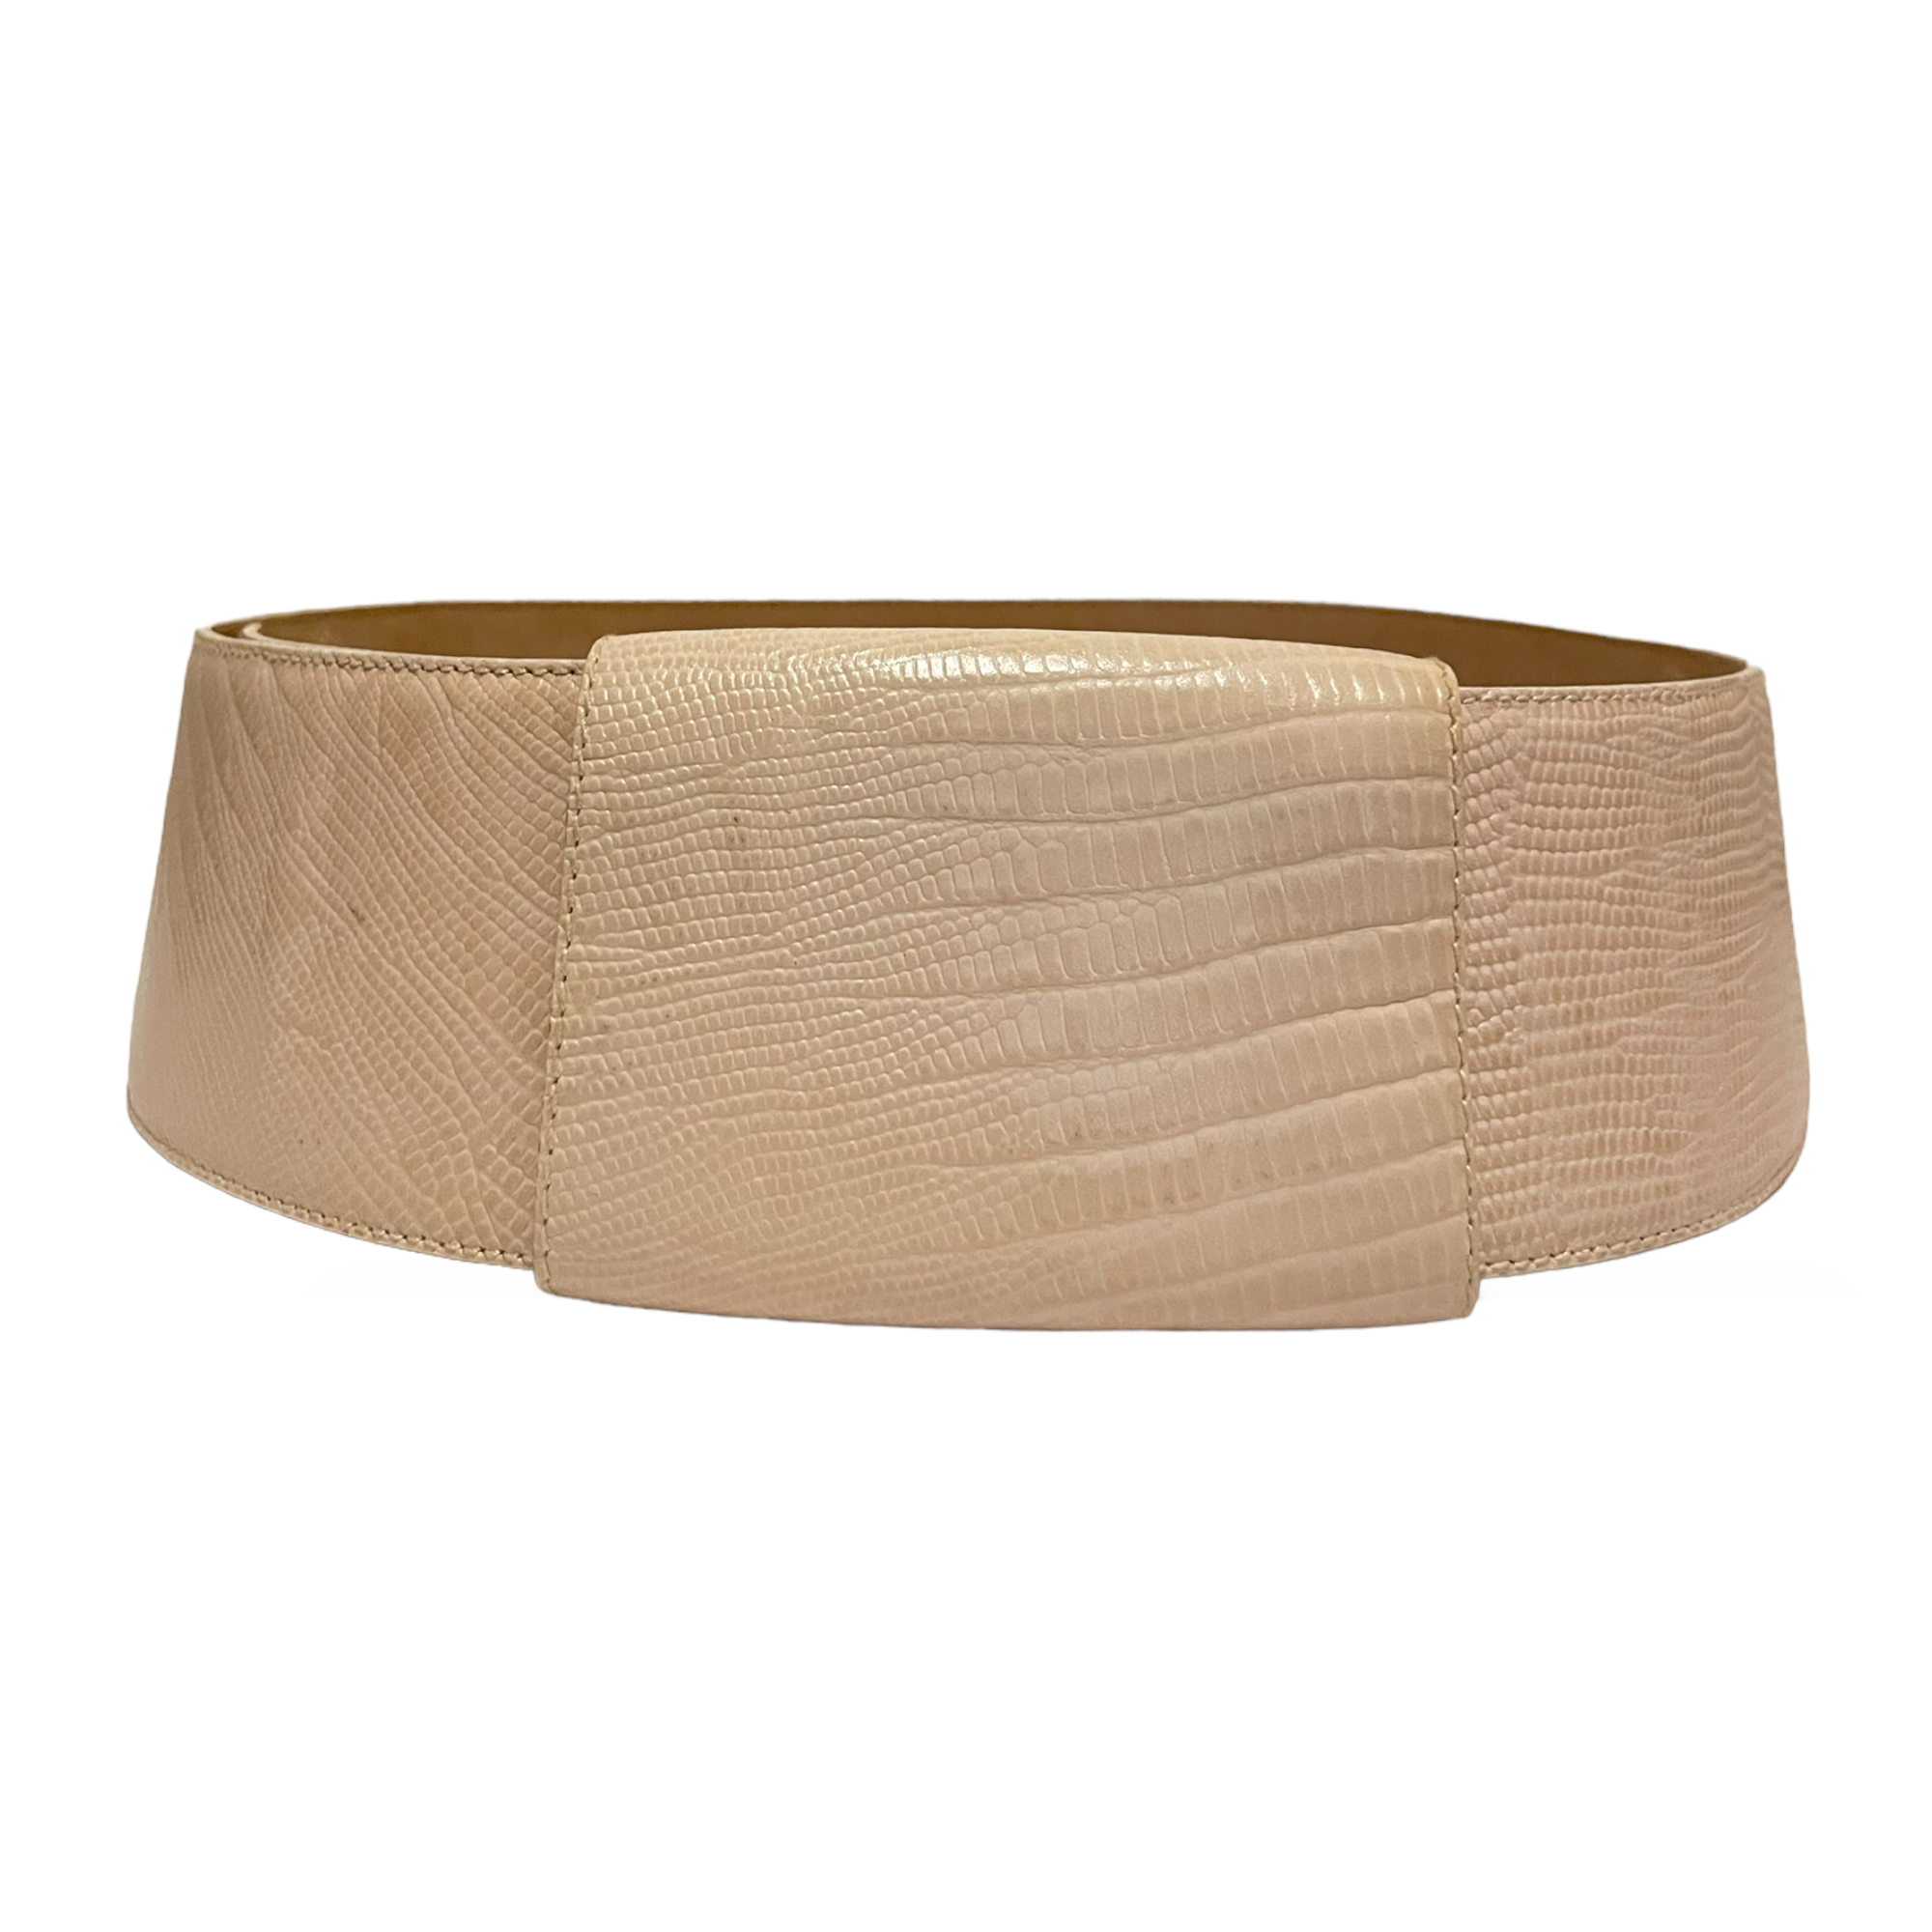 DONNA KAREN Made in Italy (Adjustable) Embossed Animal Print Waist Belt |Size:M|